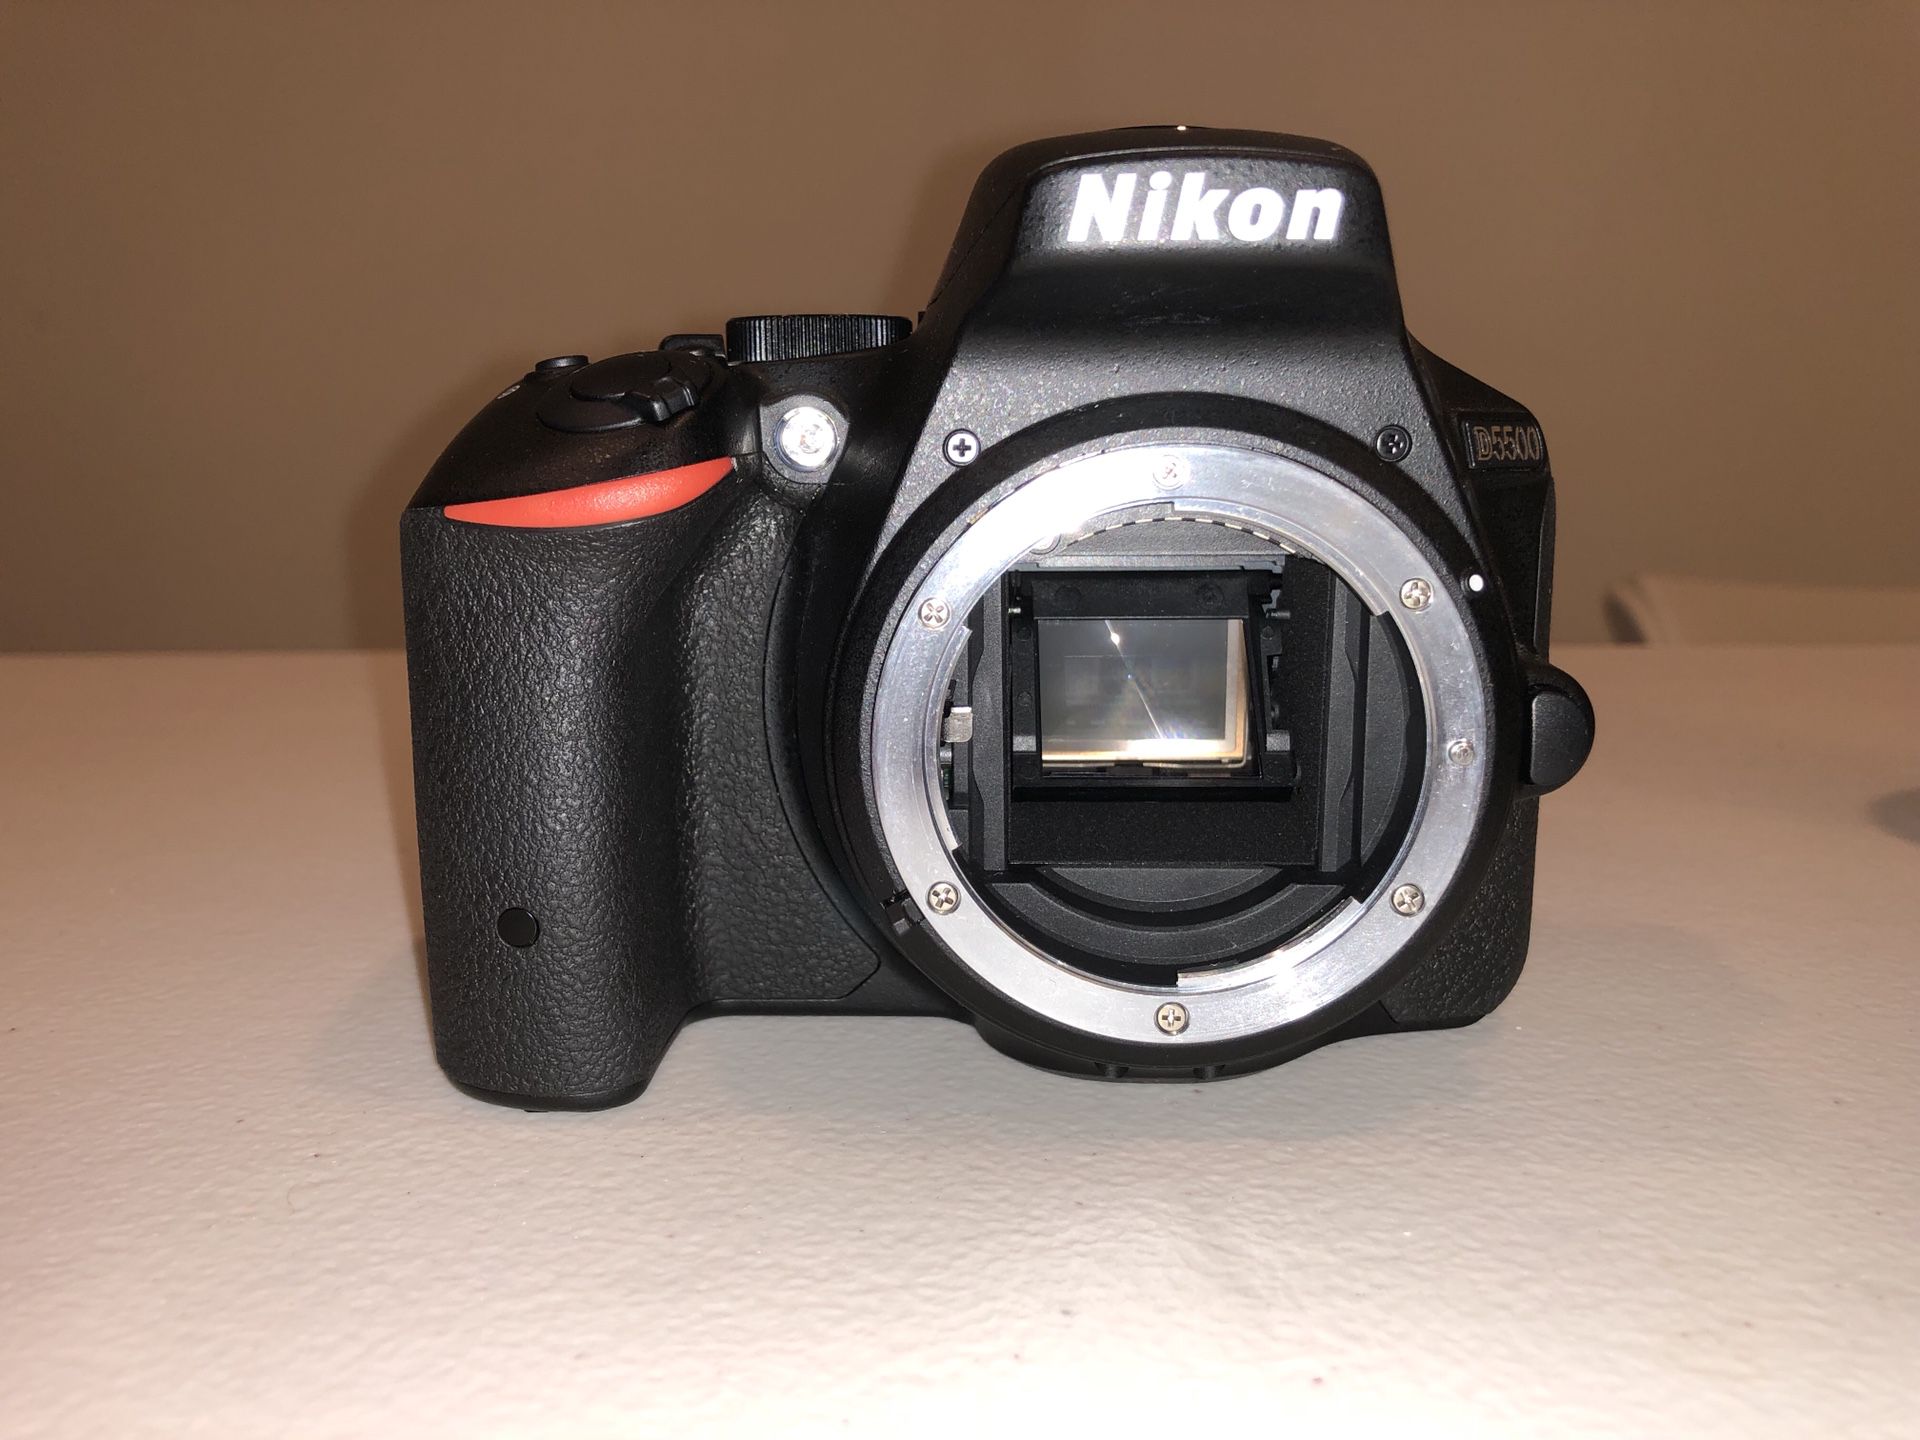 Nikon D5500 with two lenses